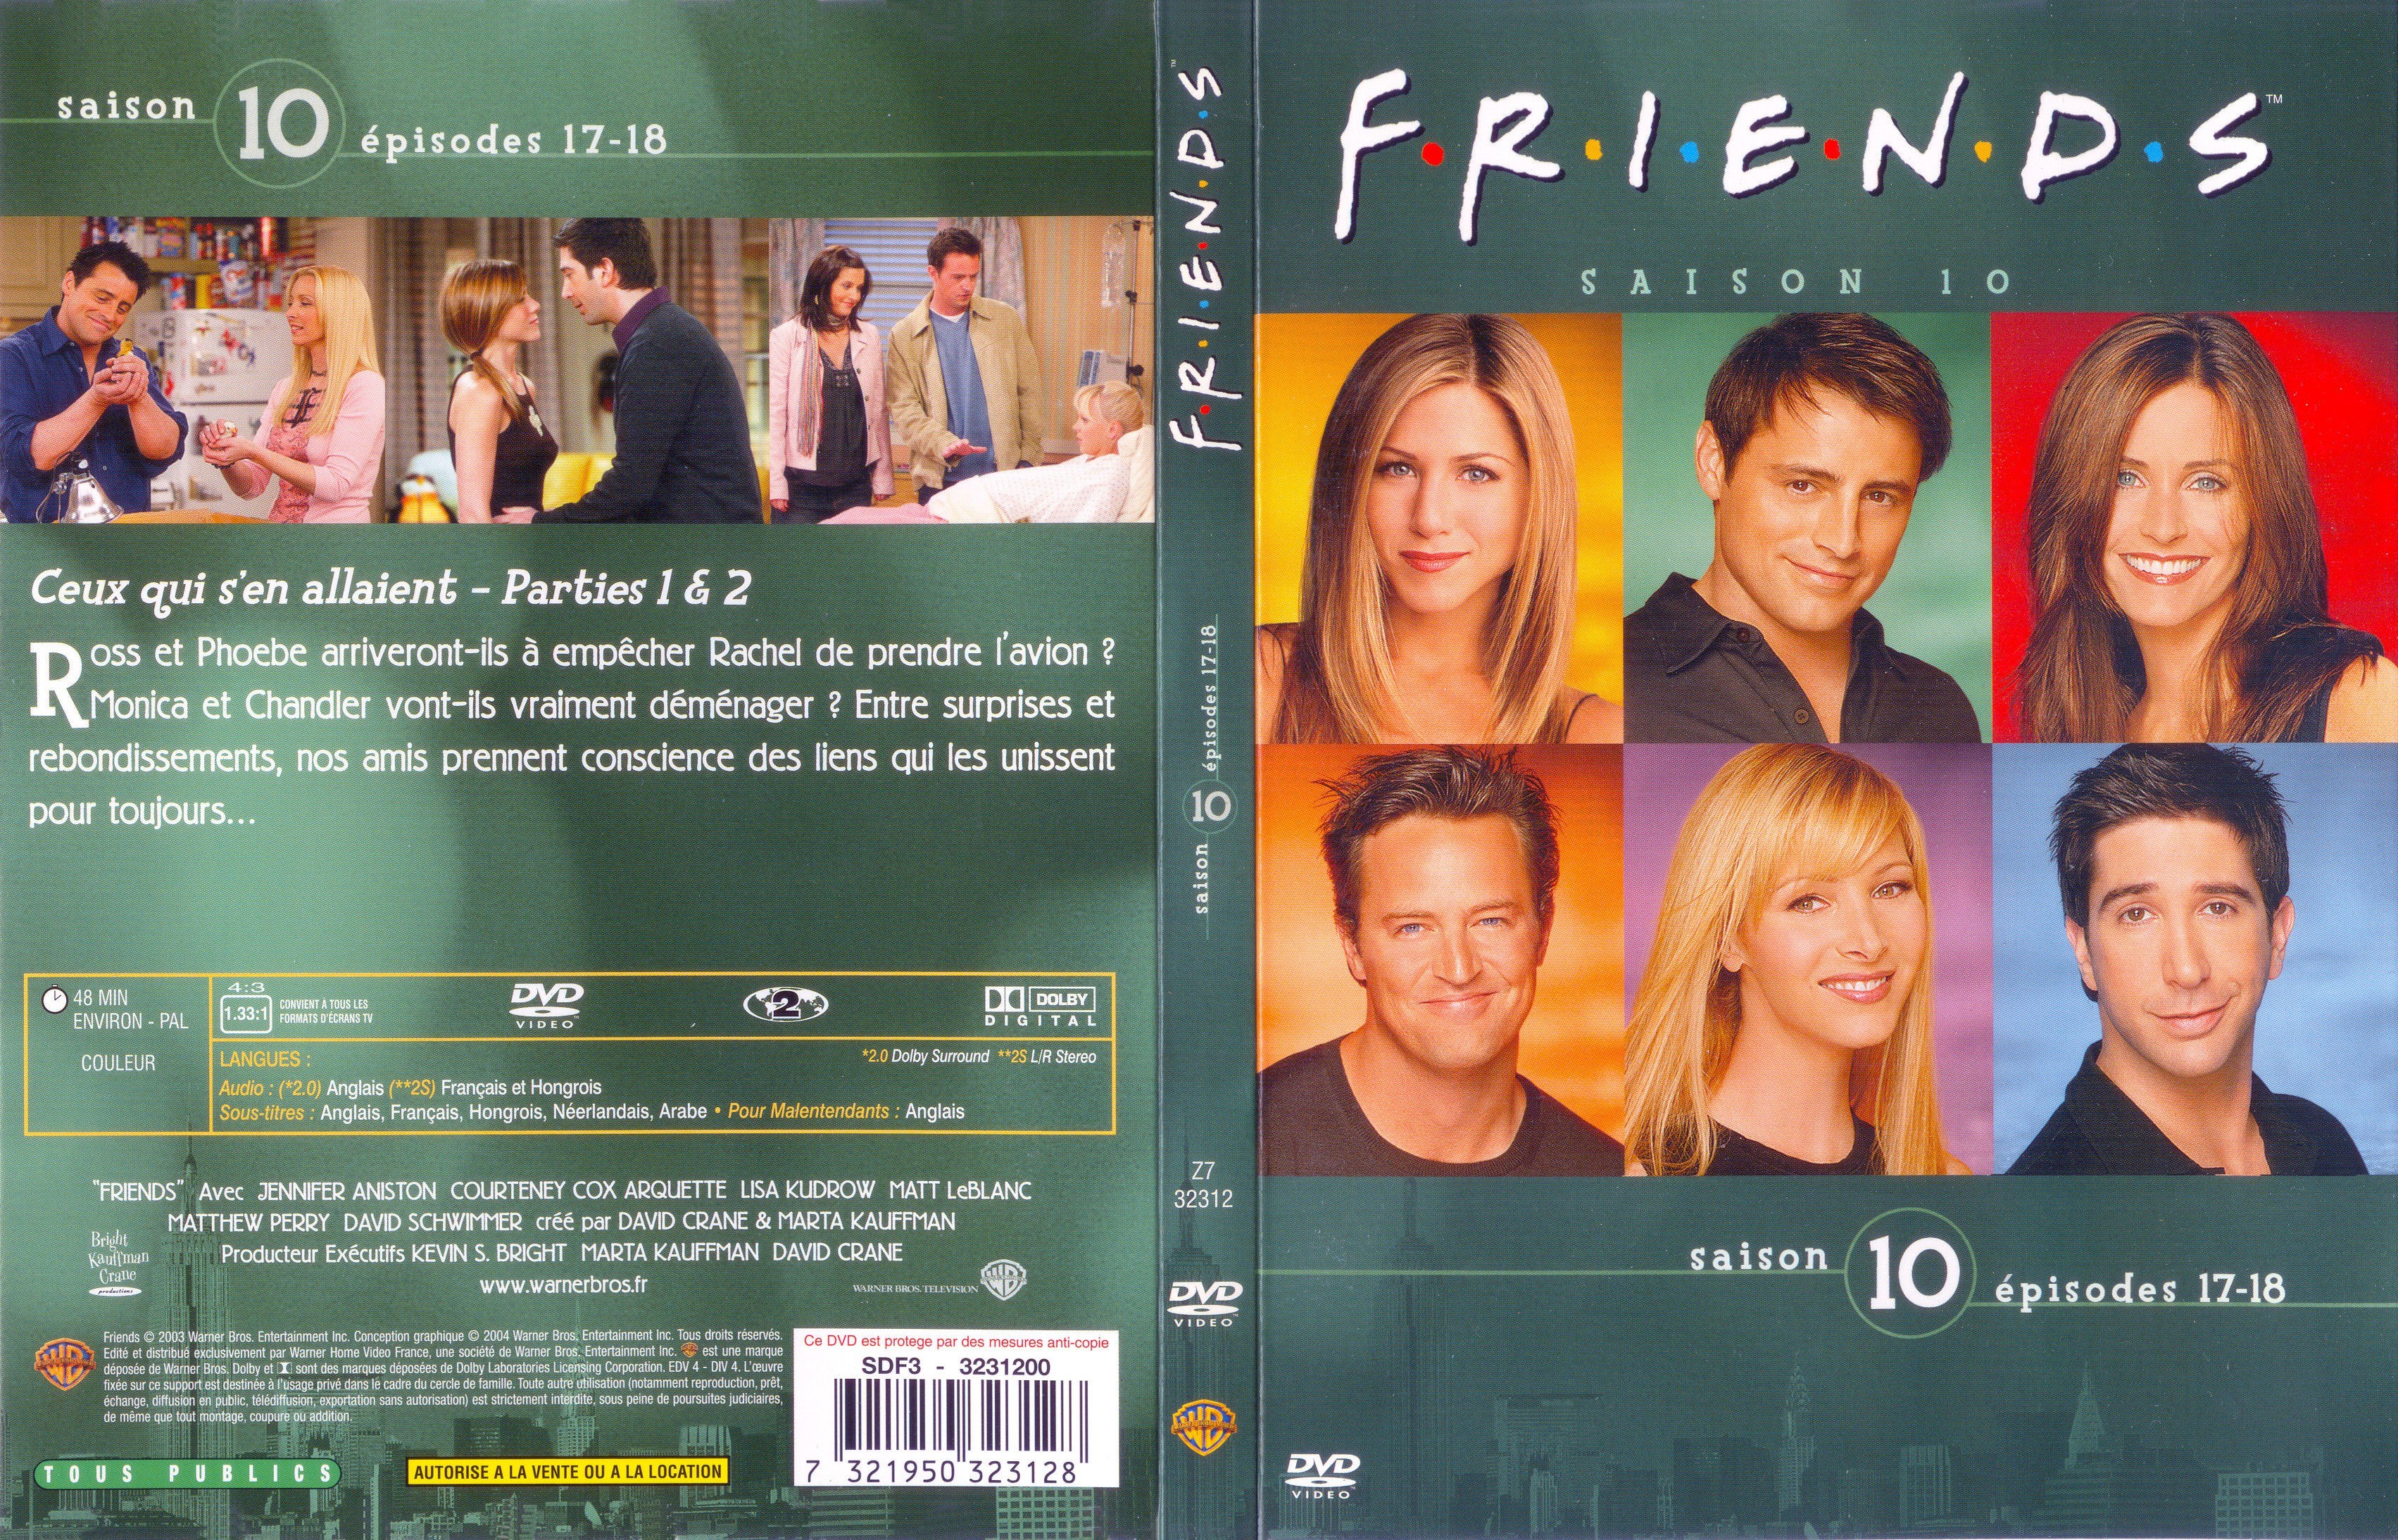 Jaquette DVD Friends saison 10 dvd 5